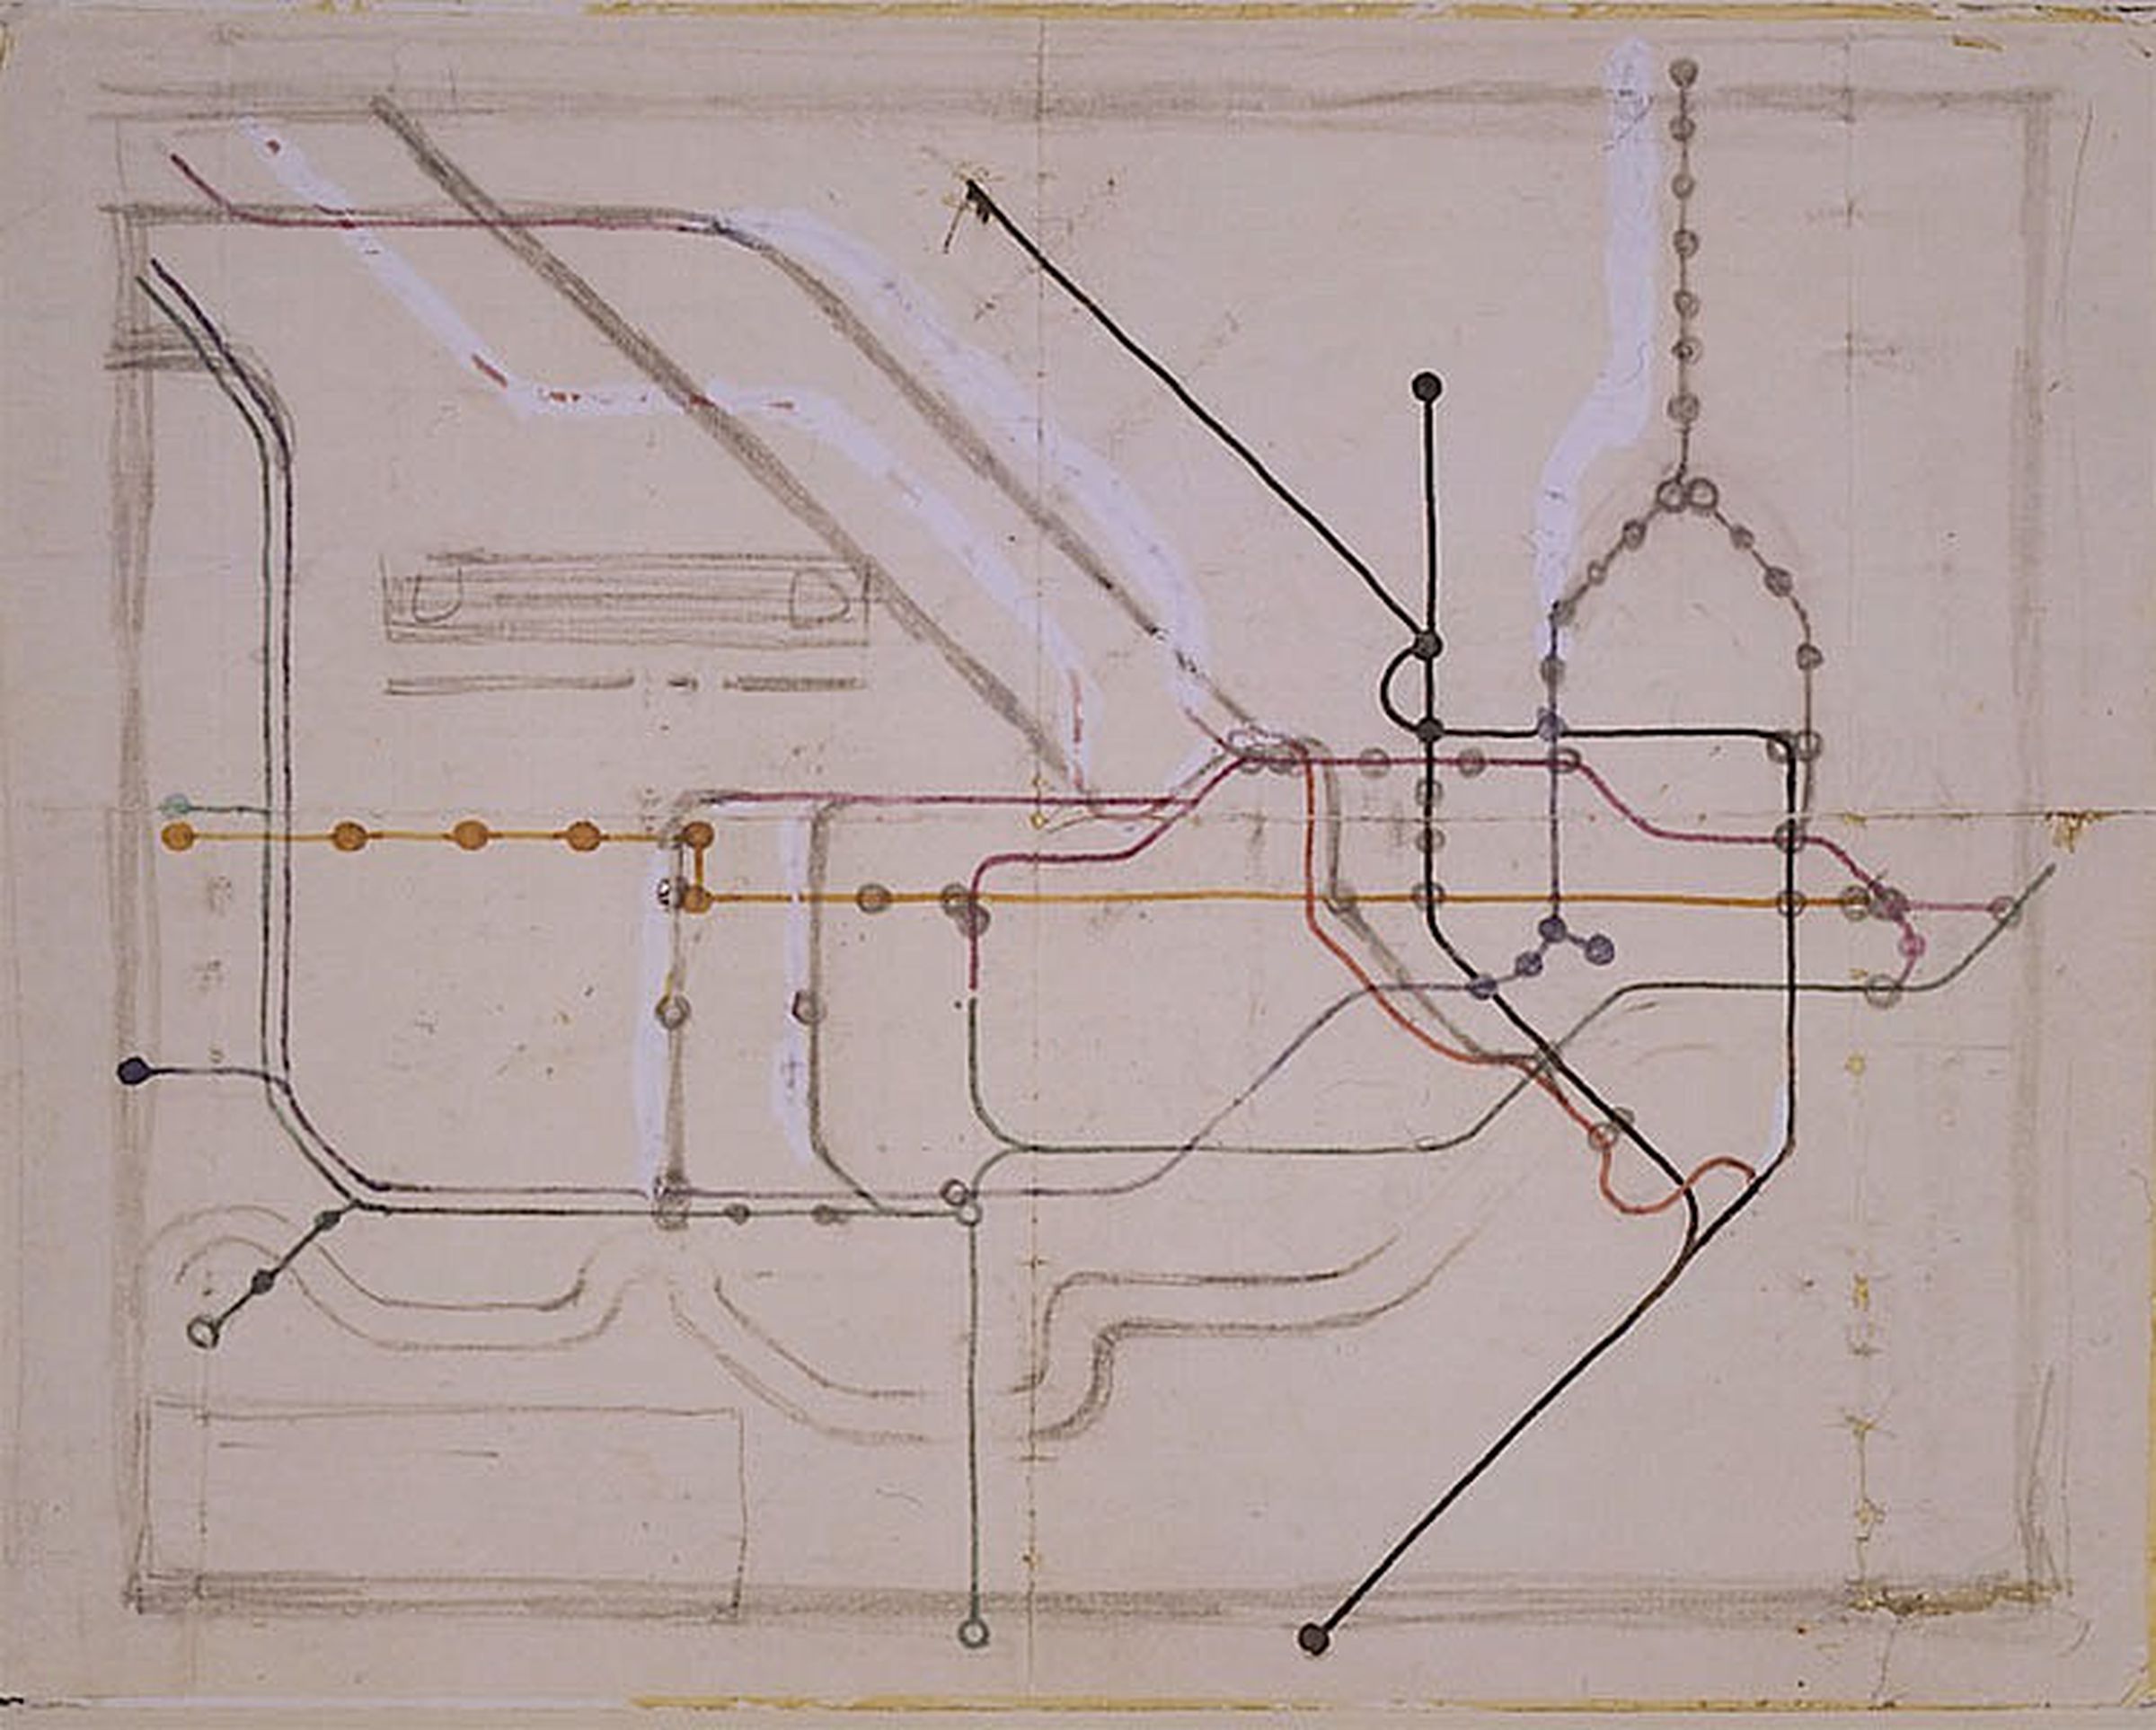 Maps of the London Underground, 1908-2012